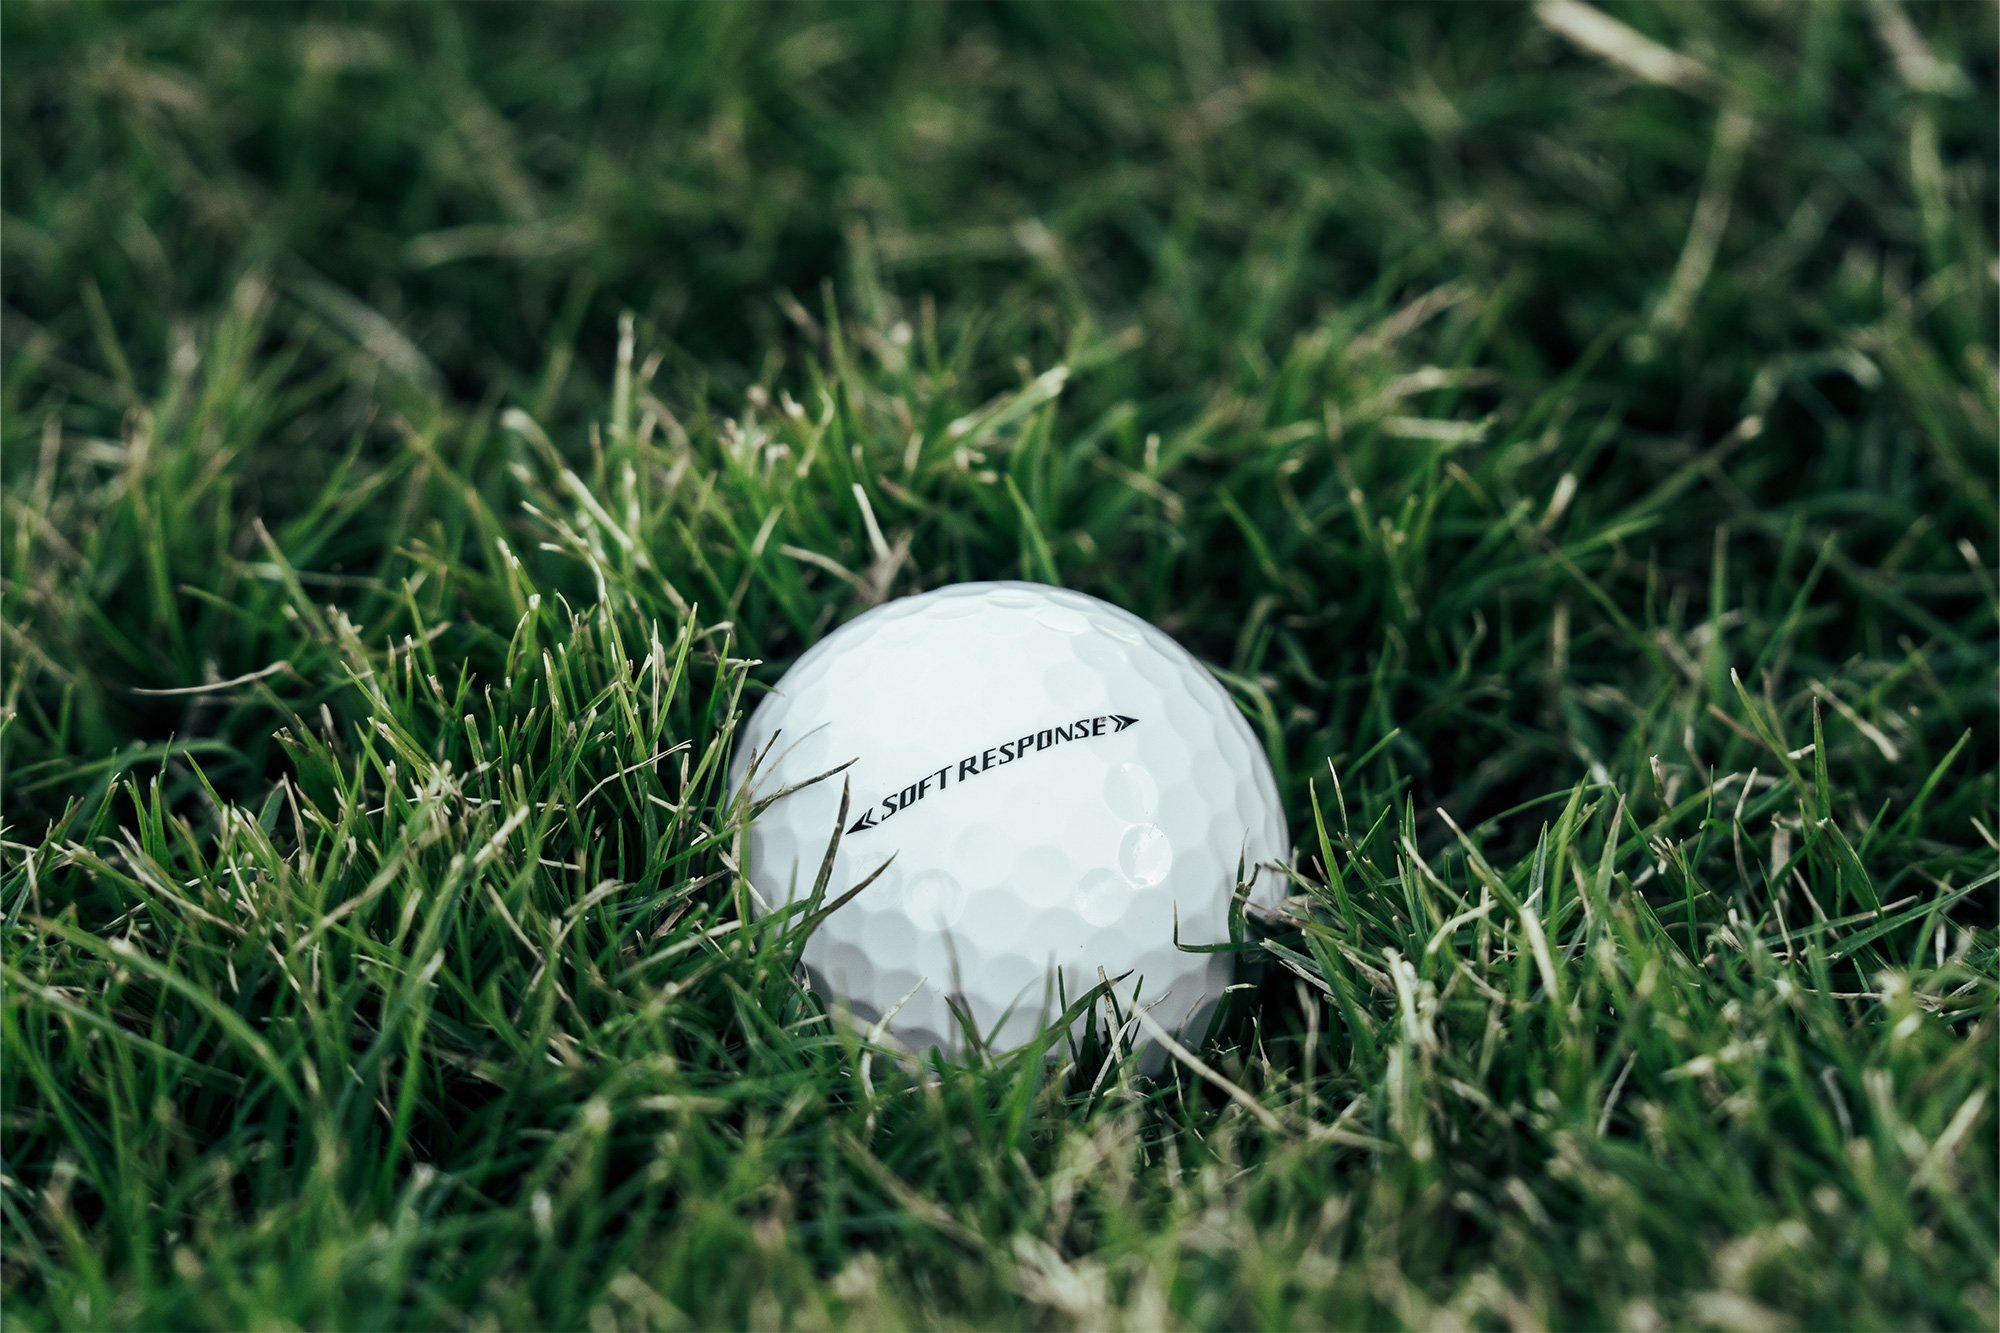 TaylorMade golf balls 2022